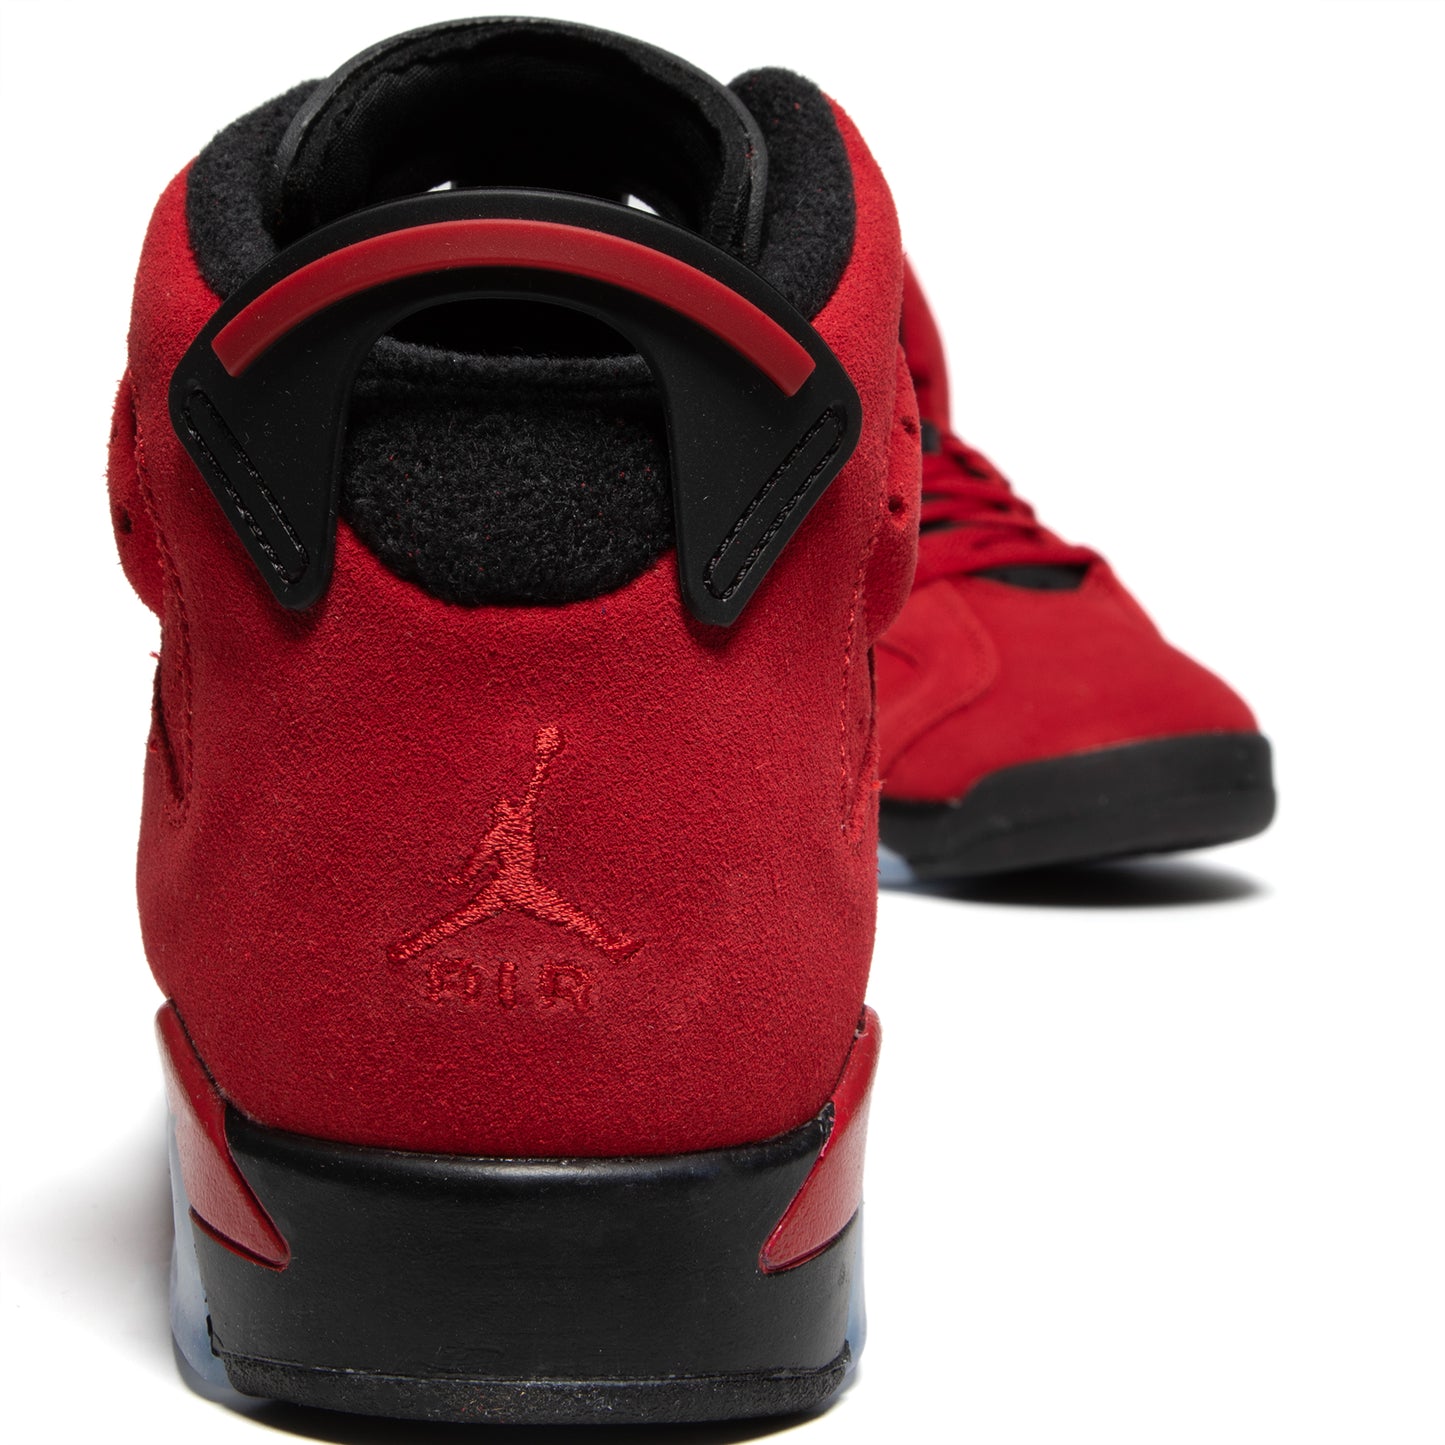 Nike Kids Air Jordan 6 Retro (Varsity Red/Black)